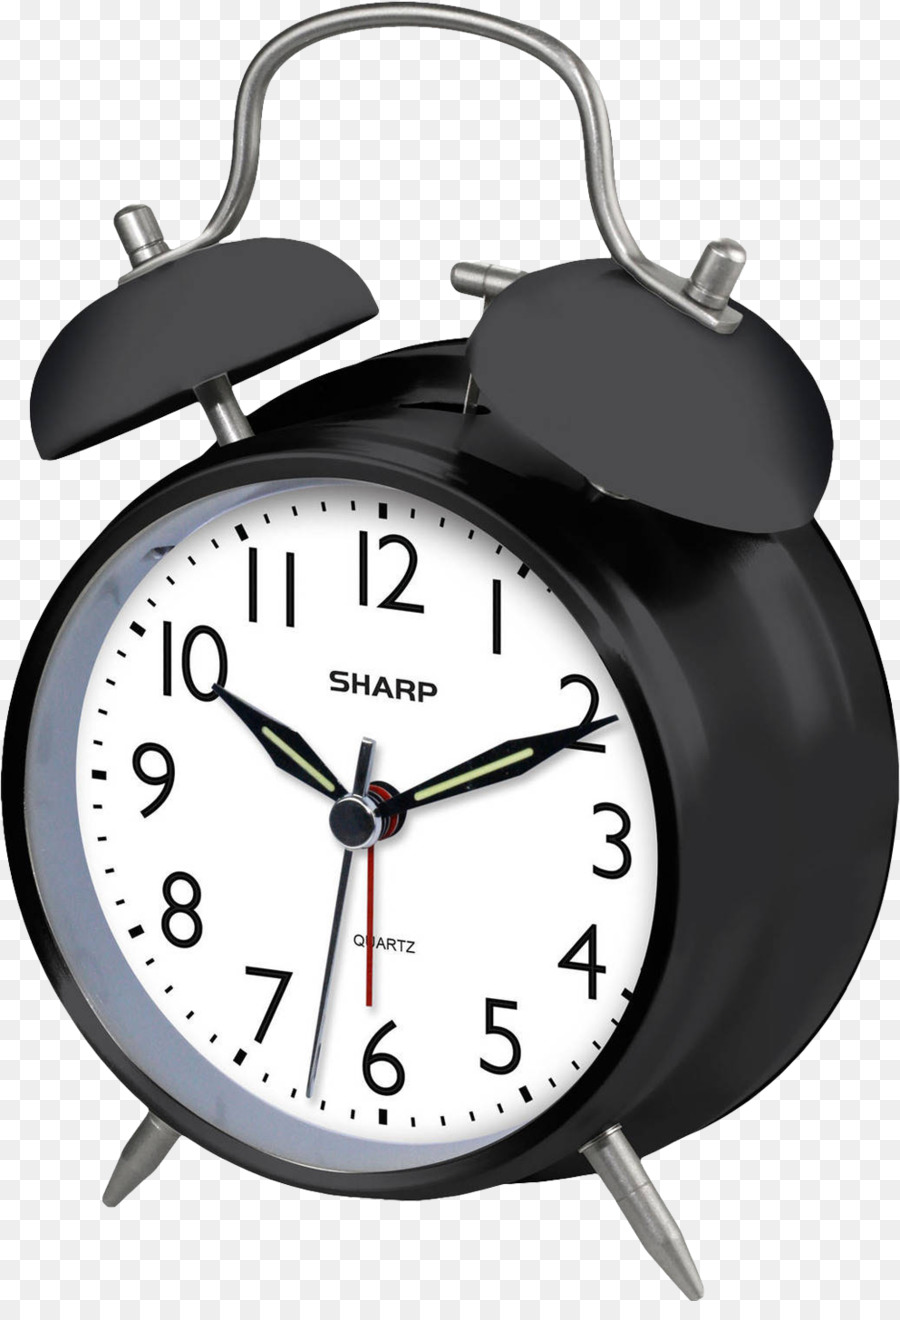 Alarm Clocks Sharp Twinbell Quartz Analog Alarm Clock Alarm device Quartz clock - clock clip art png transparent background png download - 993*1435 - Free Transparent Alarm Clocks png Download.